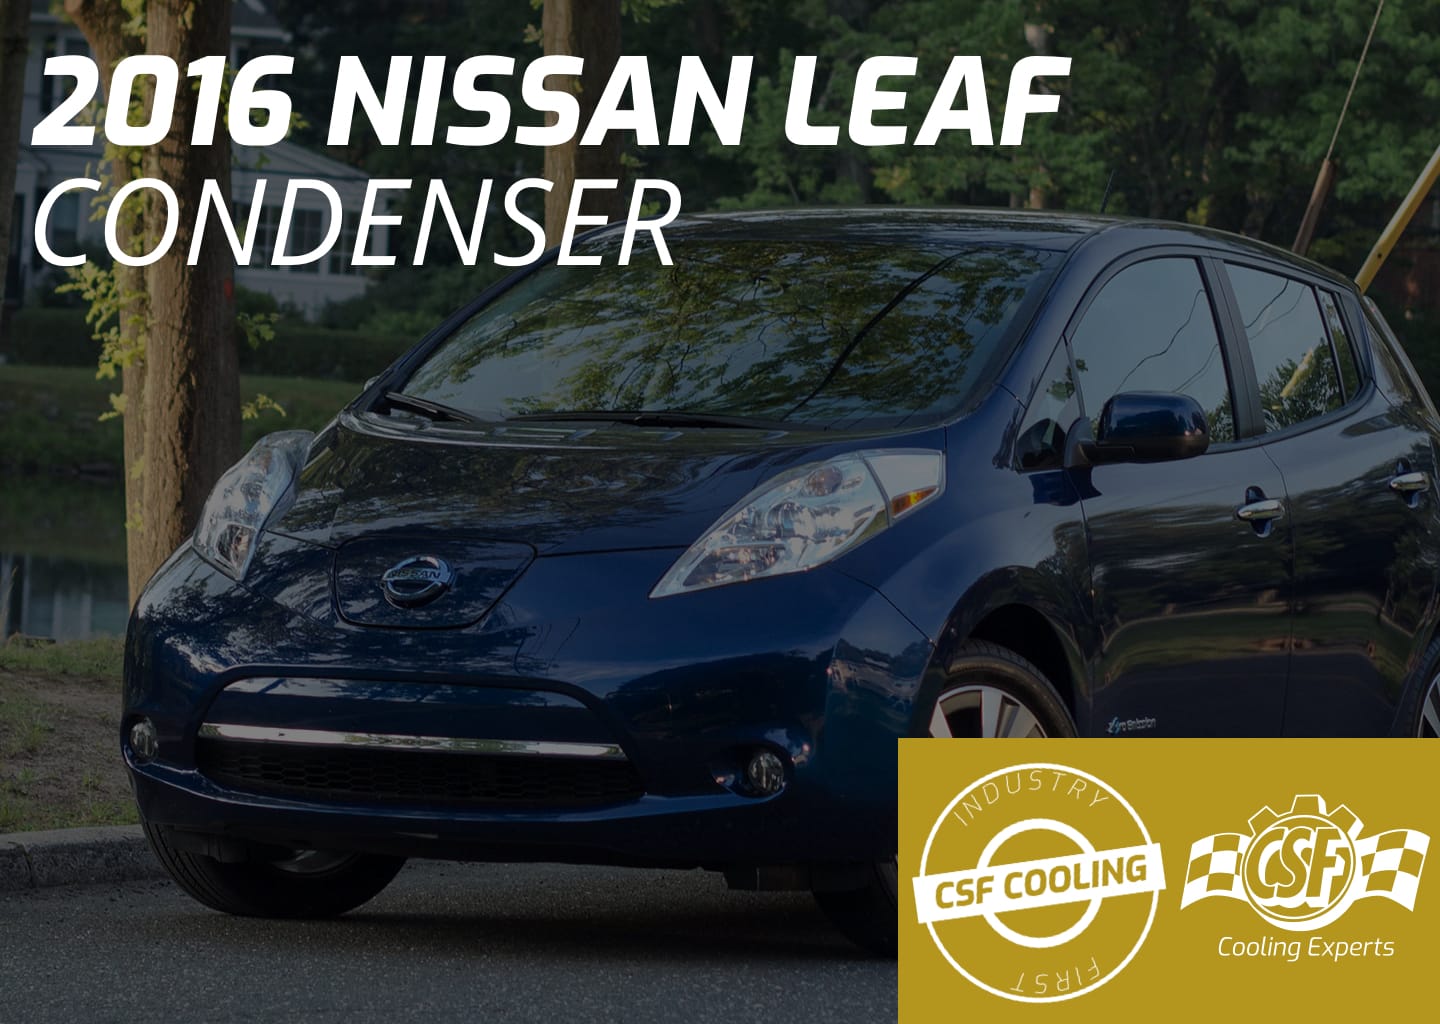 2016 Nissan Leaf Condenser